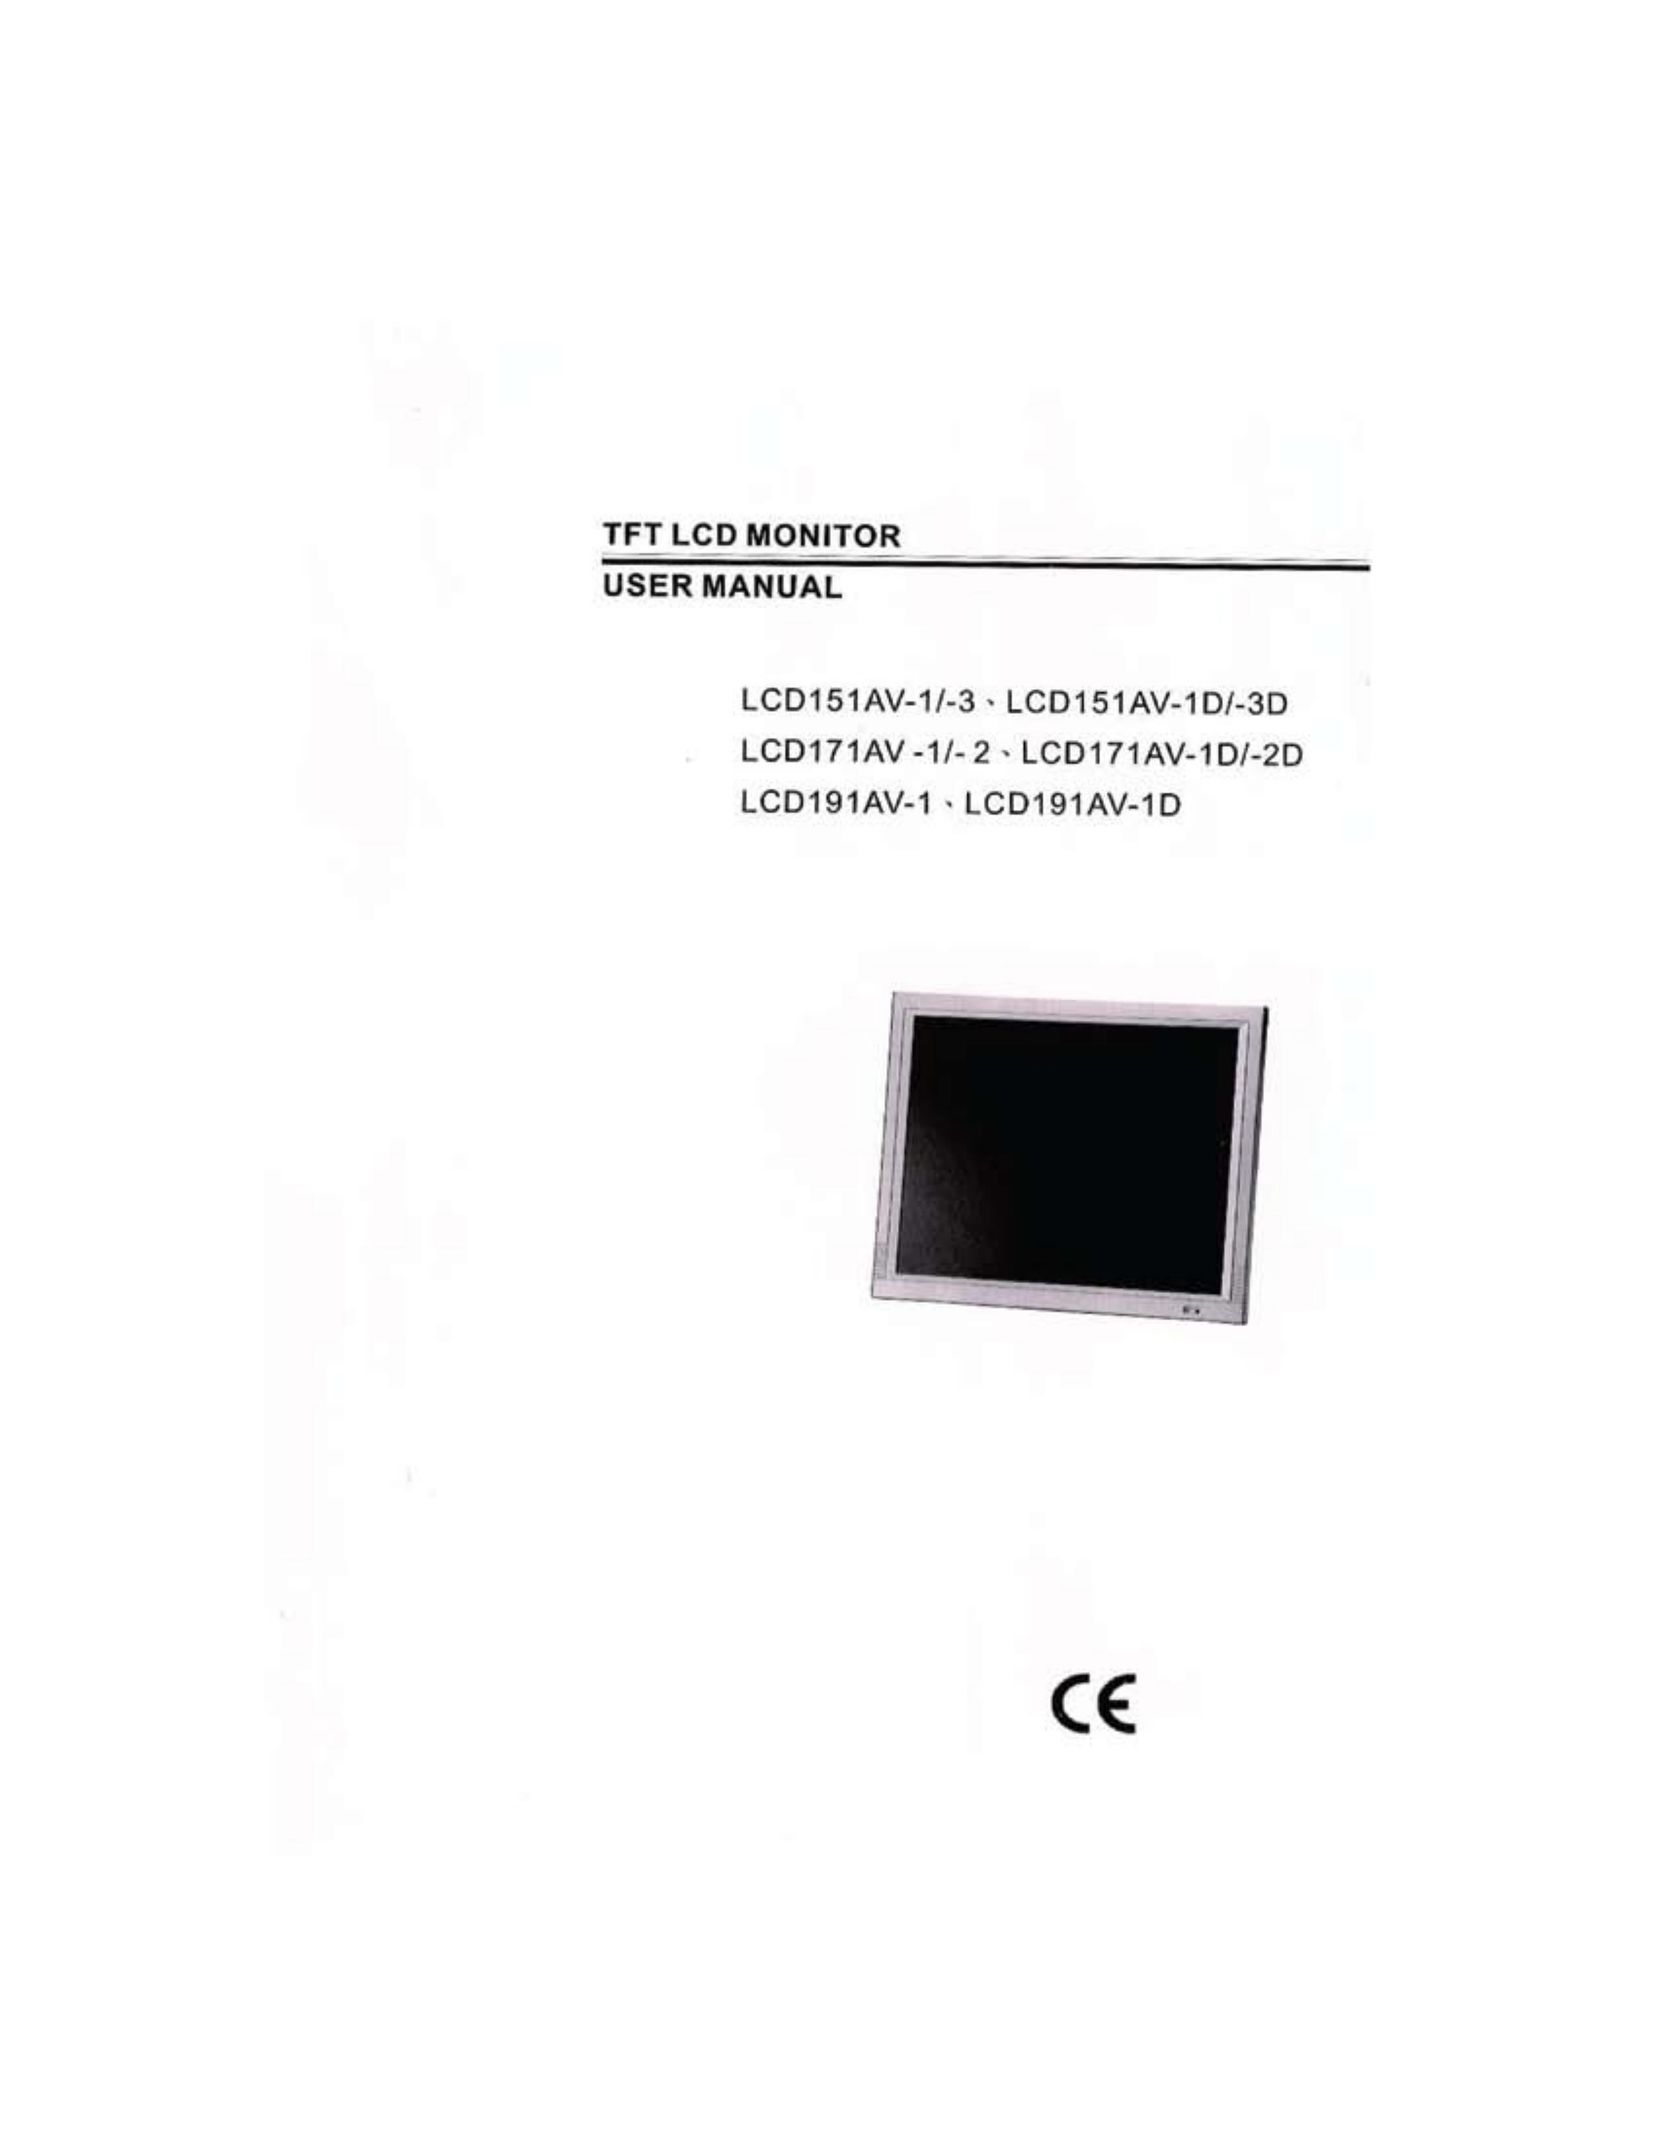 AVE LCD151AV-1D/-3D Computer Monitor User Manual